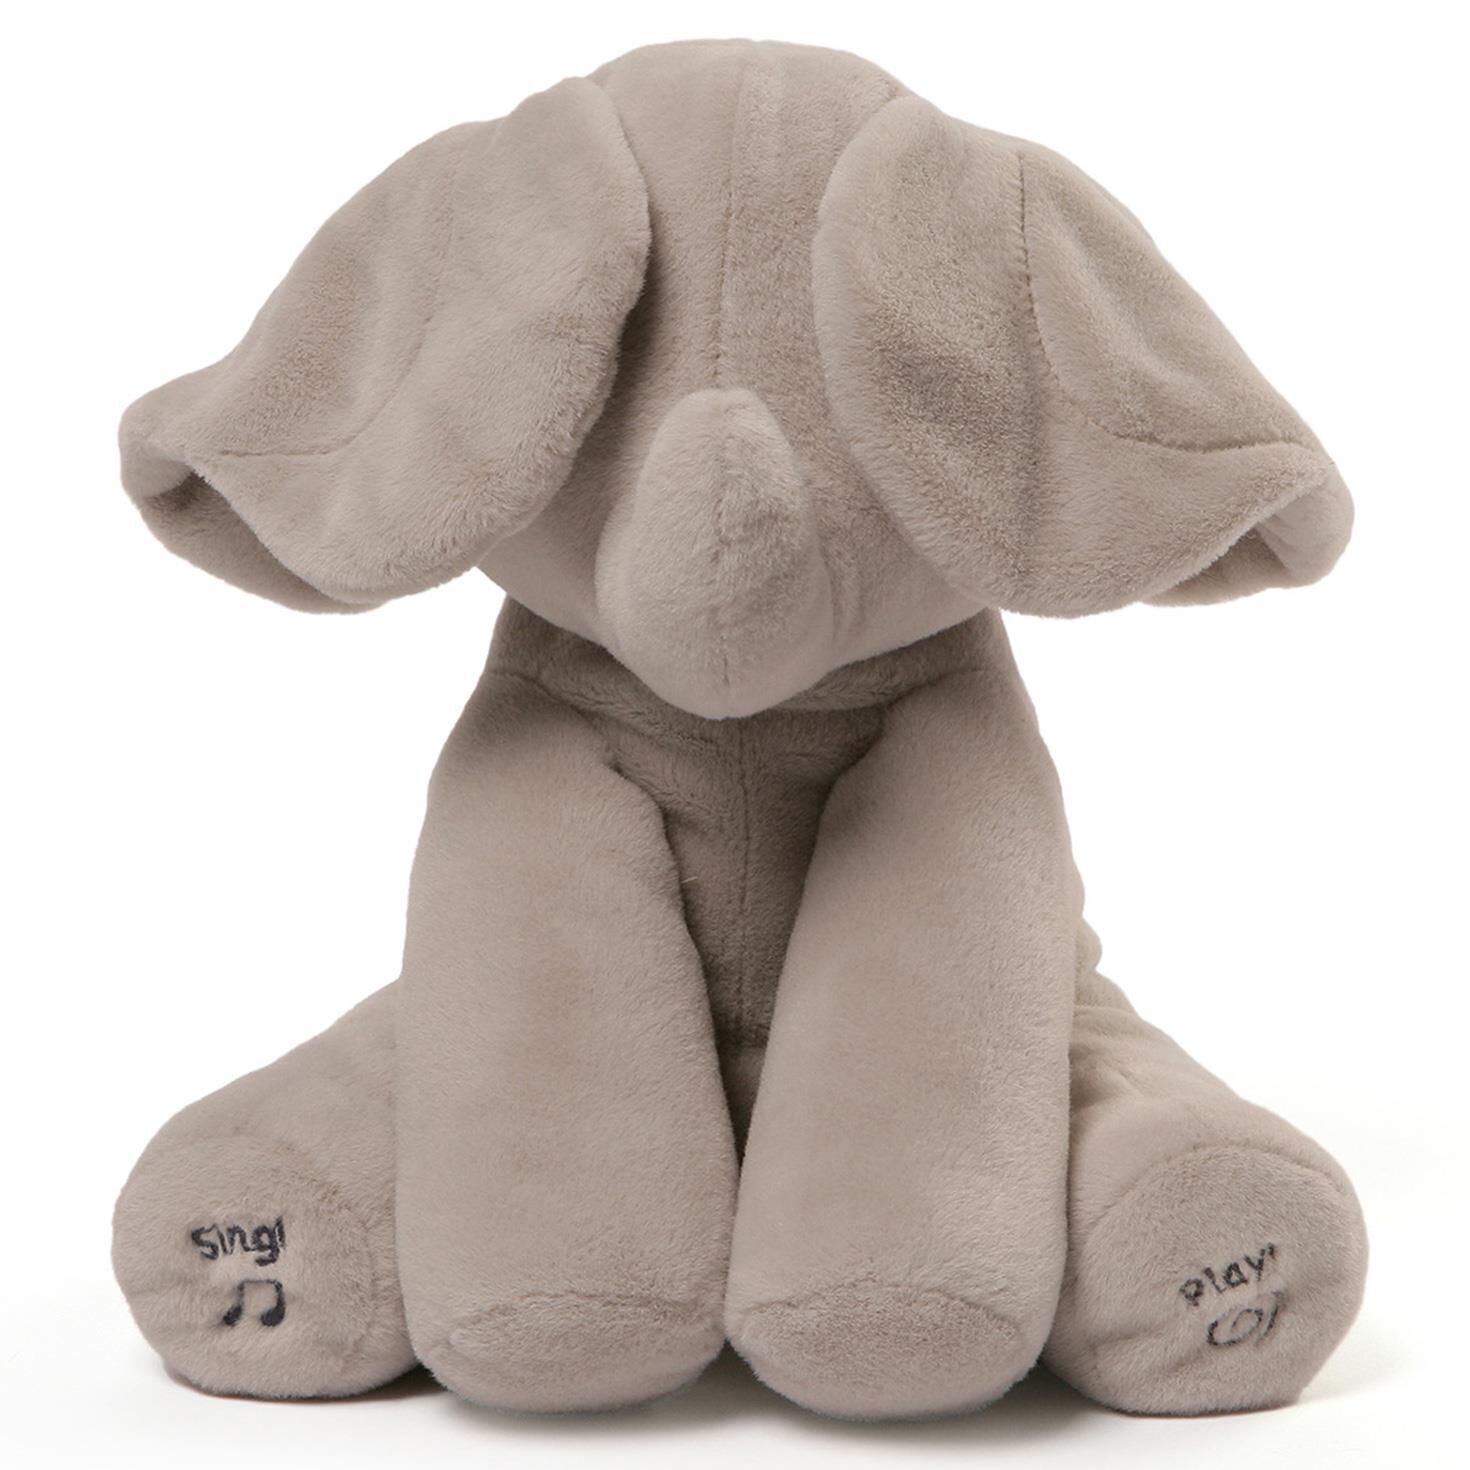 elephant stuffed animal with moving ears